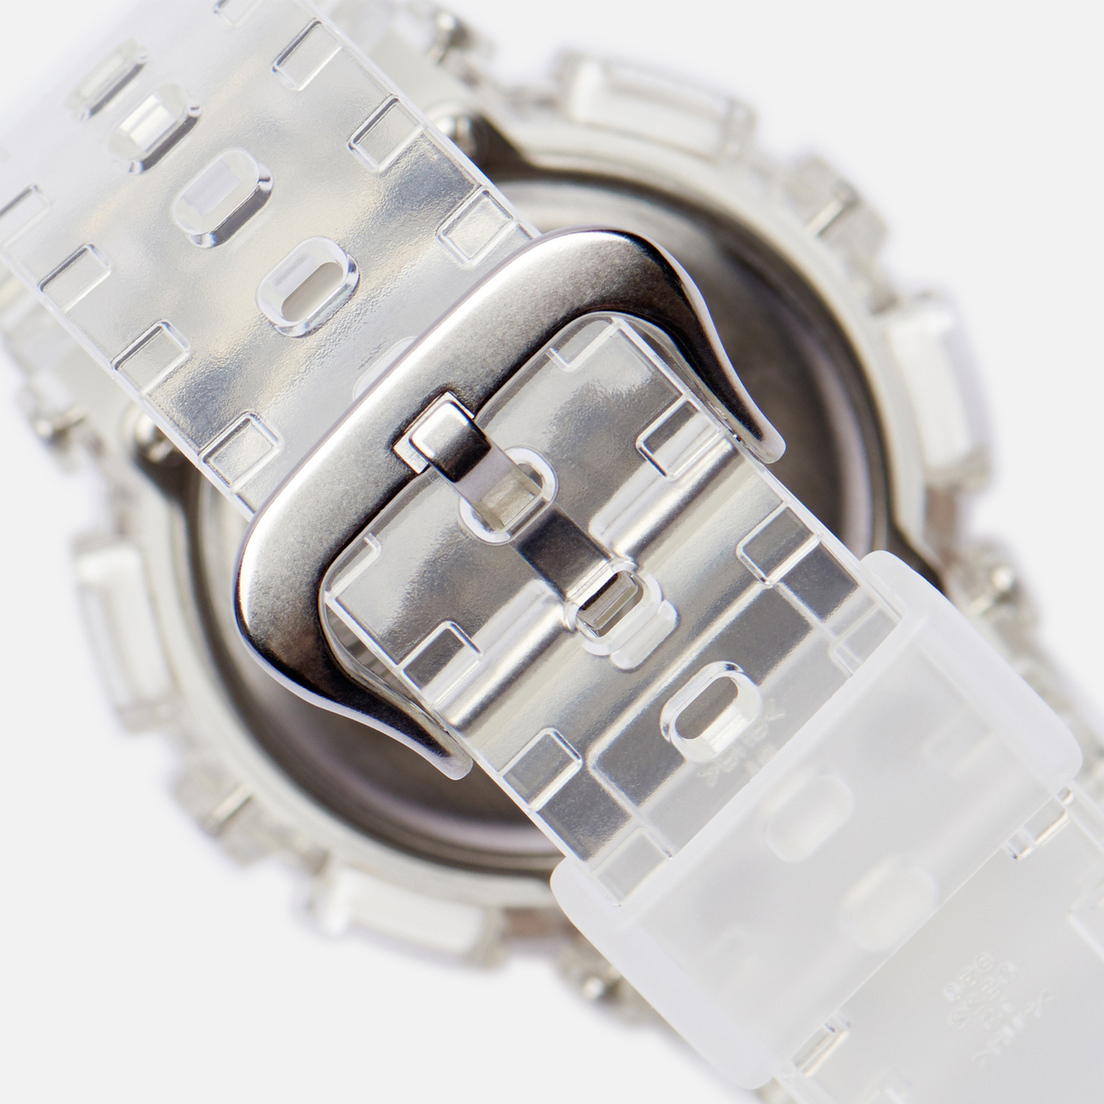 CASIO Наручные часы G-SHOCK GMA-S110SR-7A